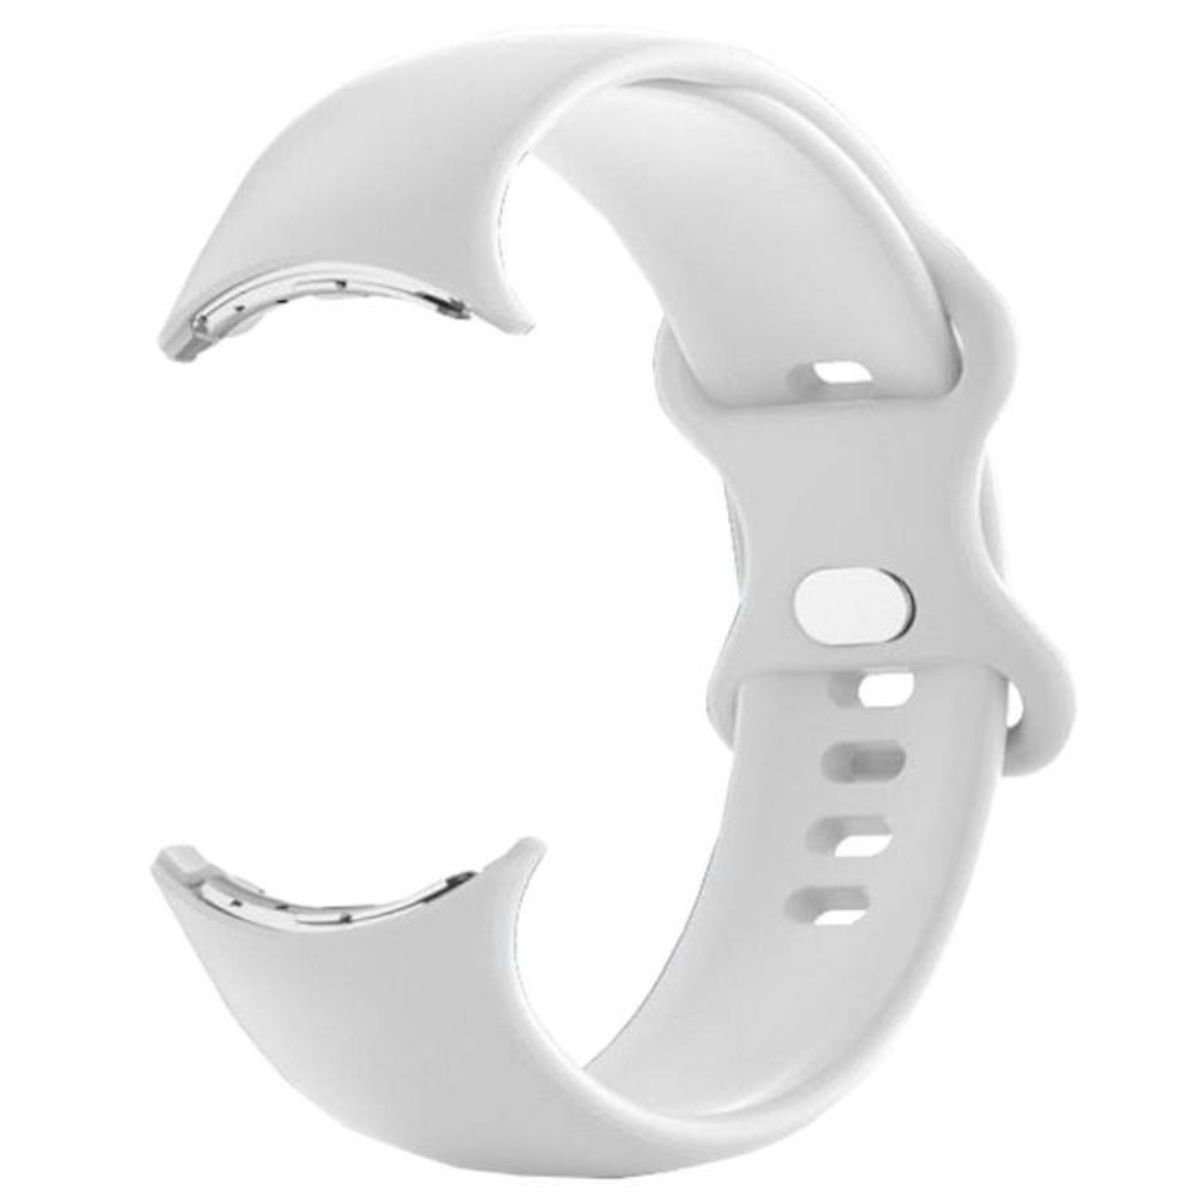 WIGENTO Kunststoff / Silikon Design 1 + Google, S, 2, Weiß Ersatzarmband, Pixel Größe Sport Band Watch